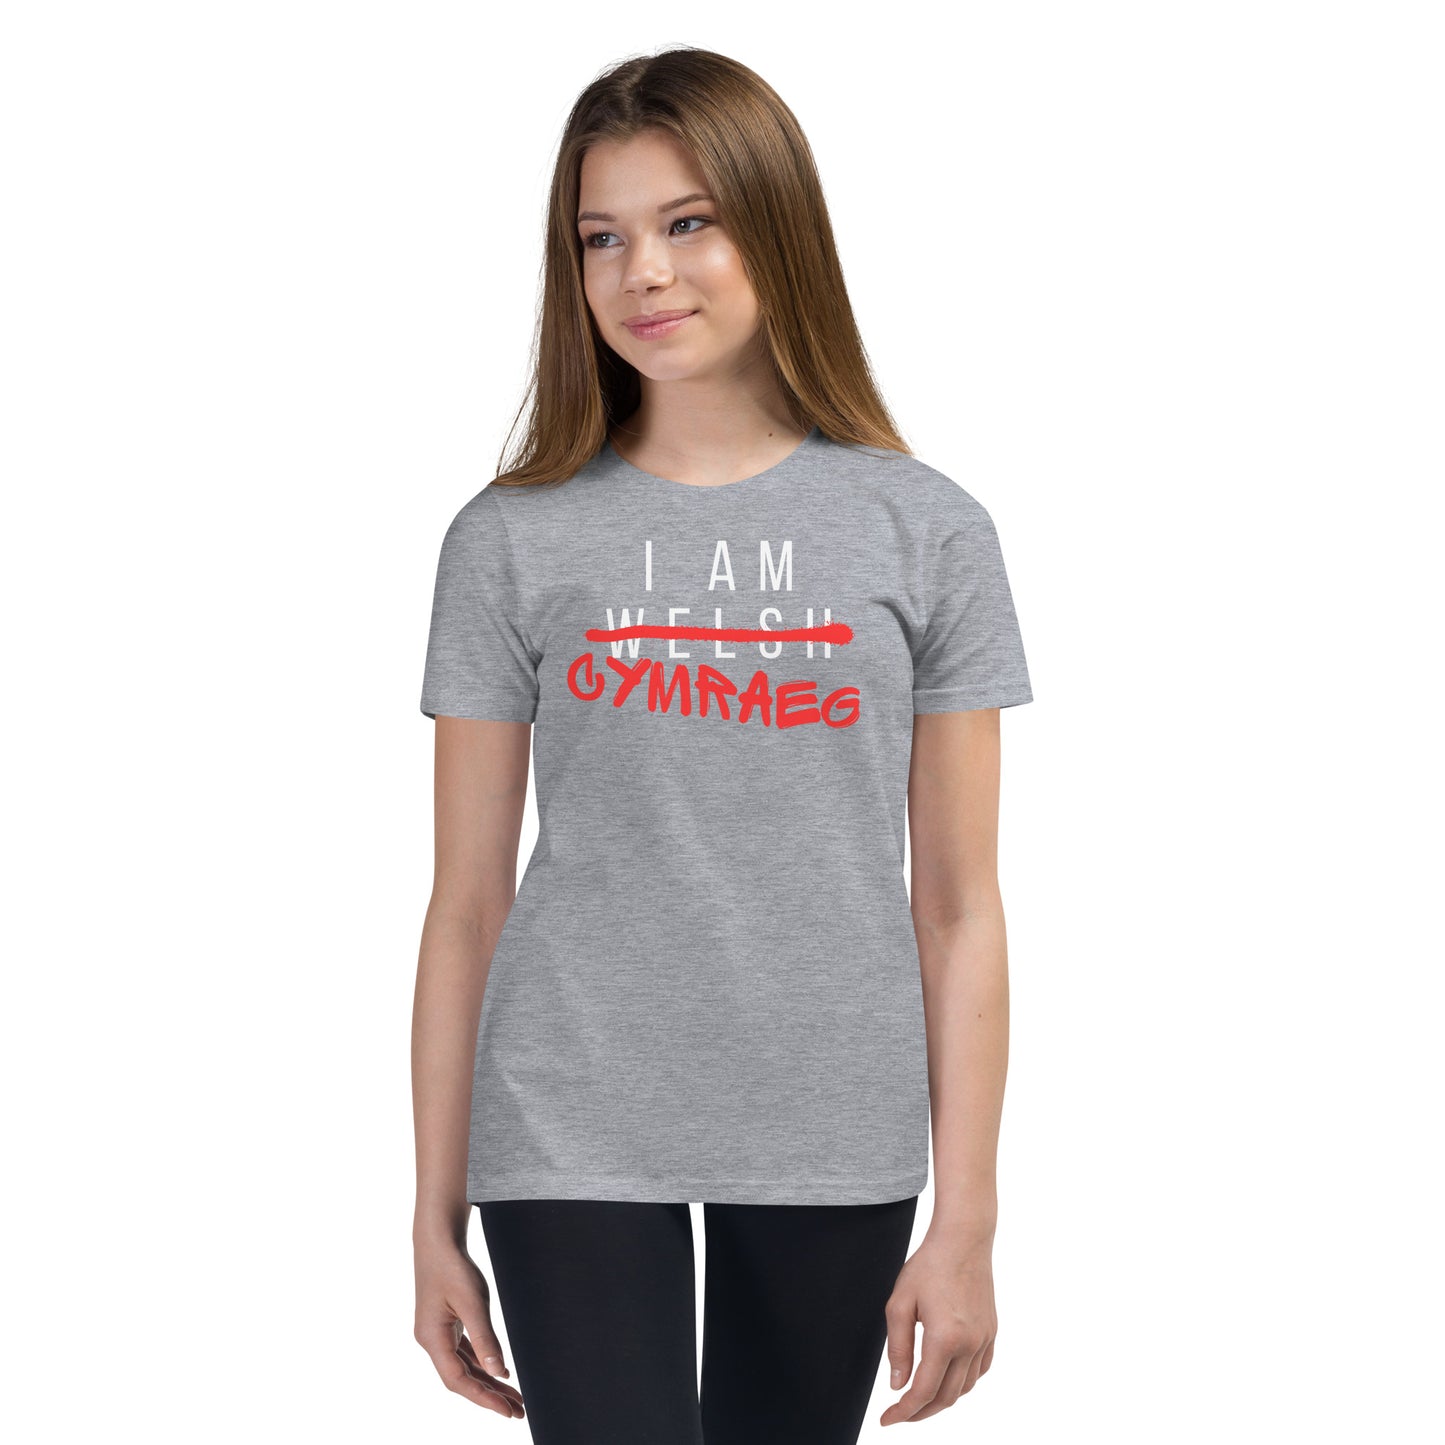 I AM Cymraeg - Youth Short Sleeve T-Shirt